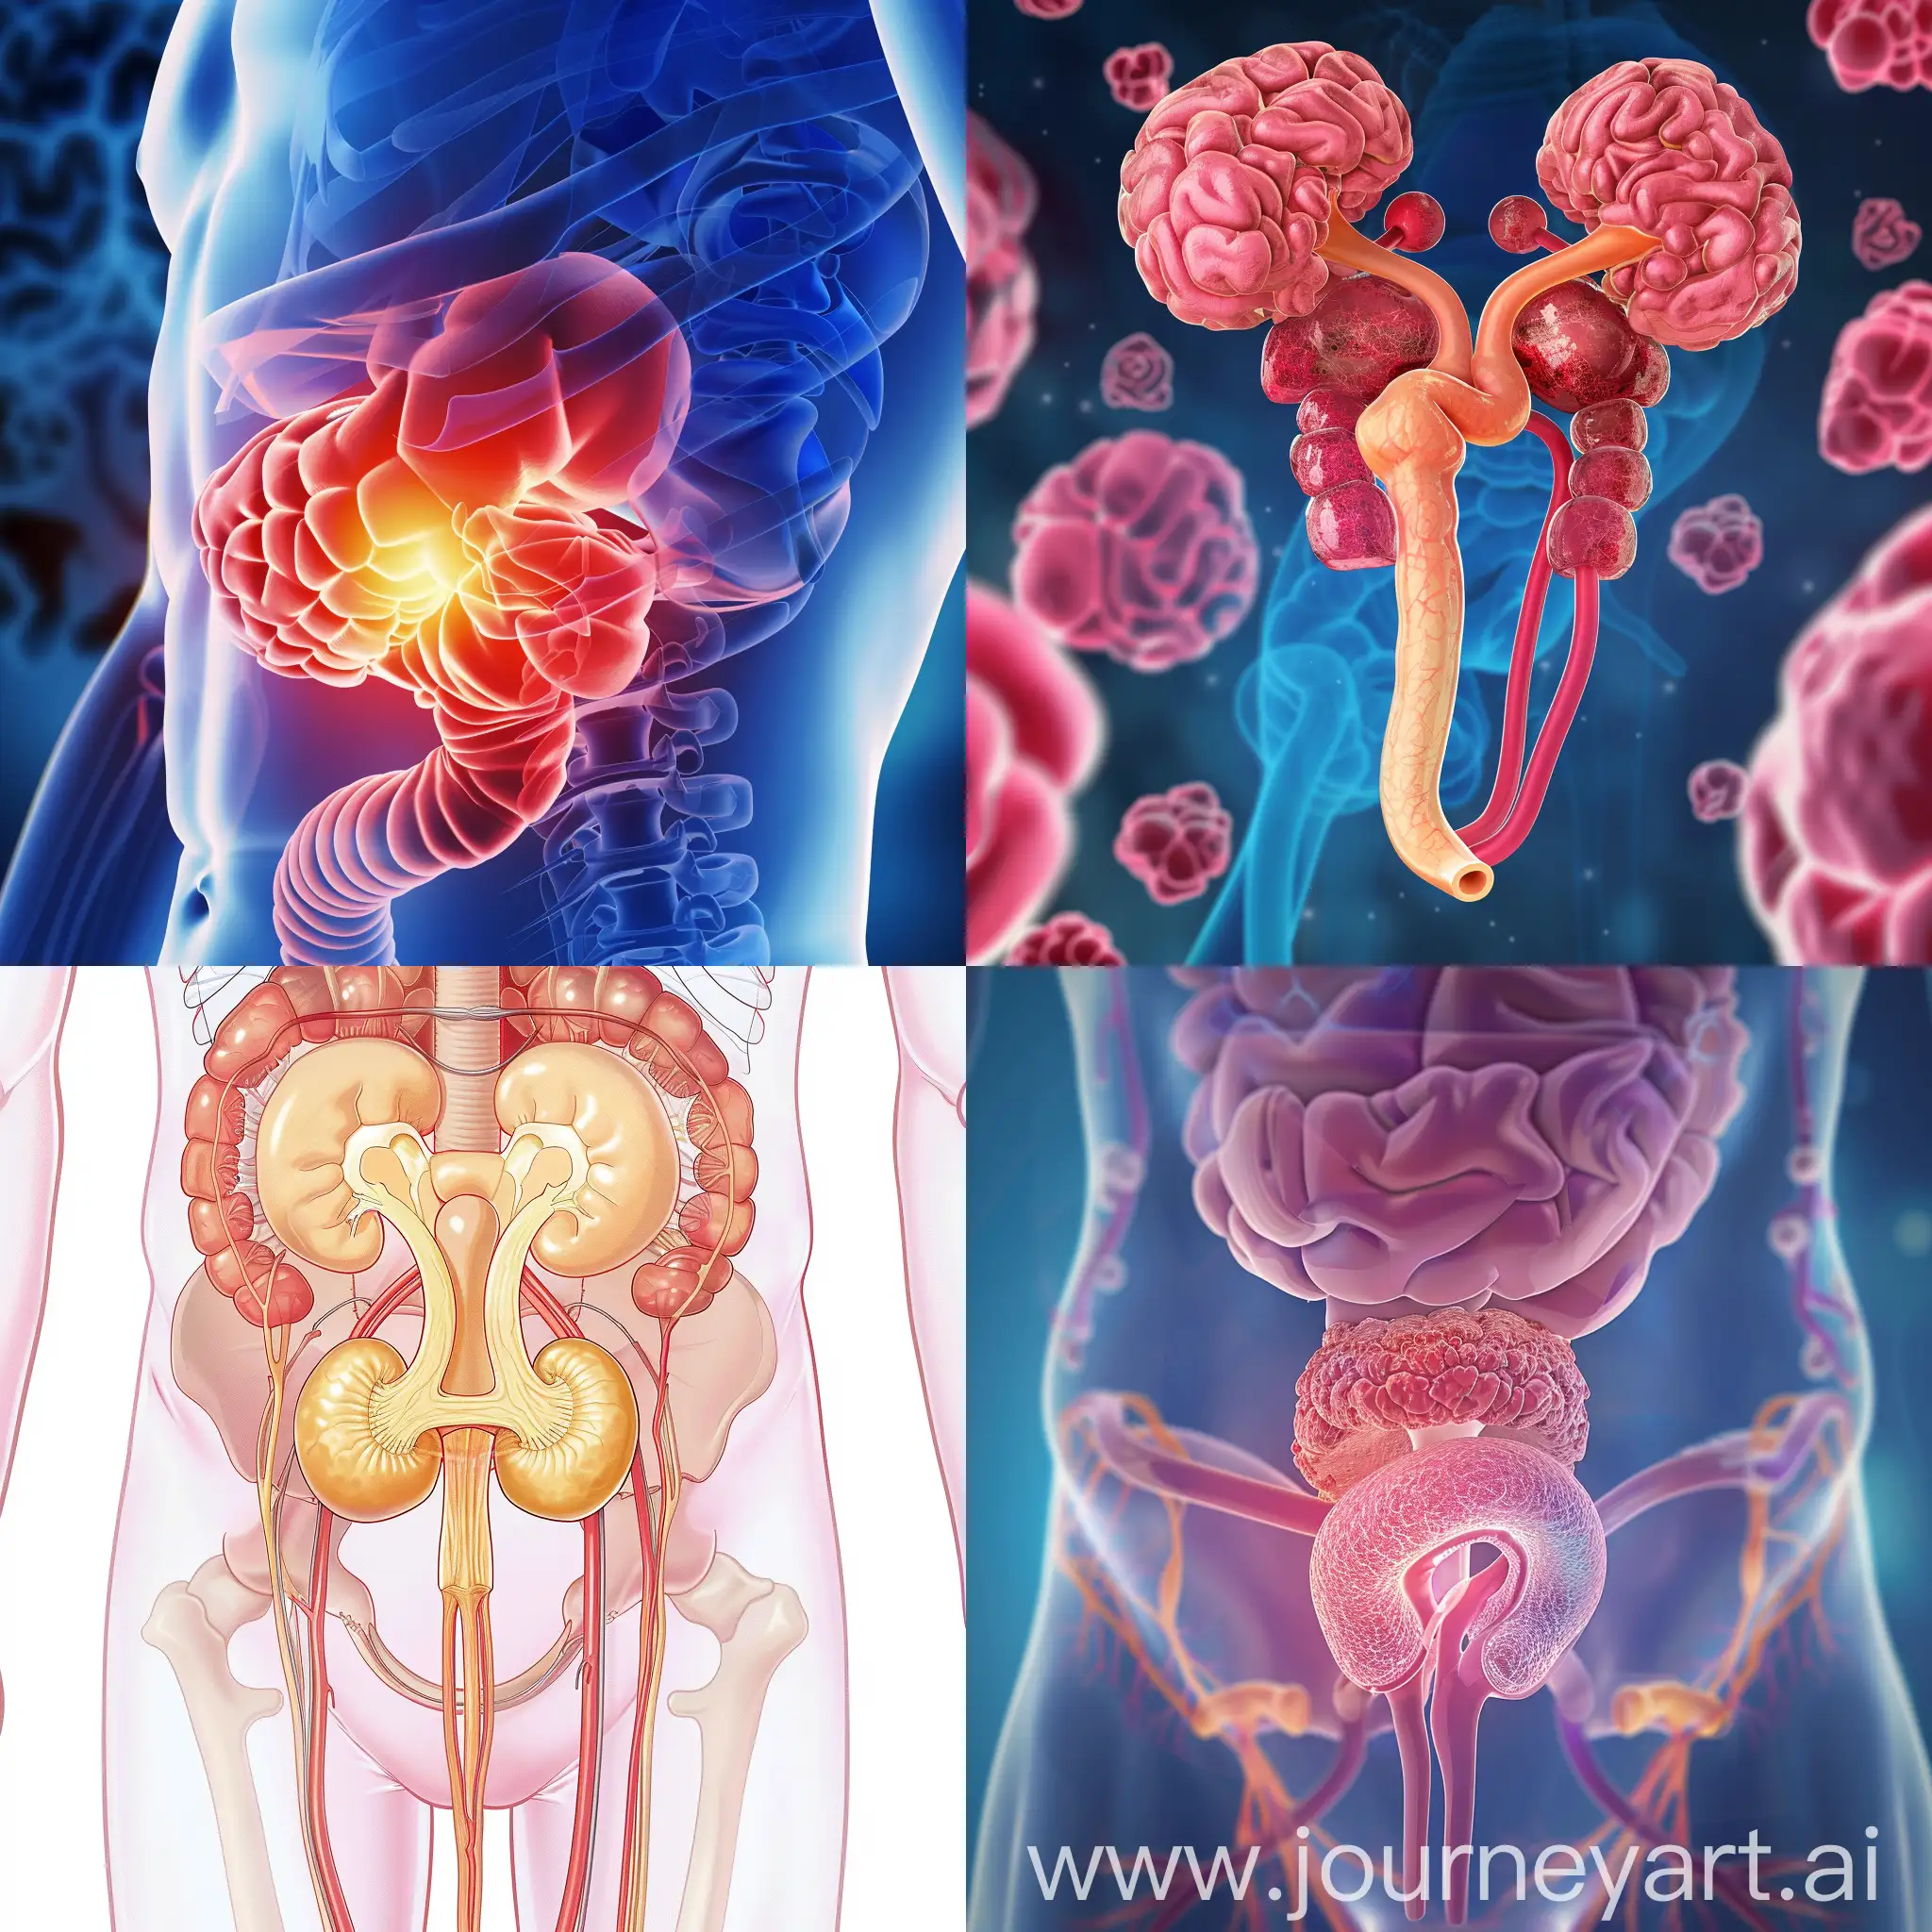 Illustration-of-Megaureter-Disease-Urinary-Tract-Enlargement-in-Medical-Art